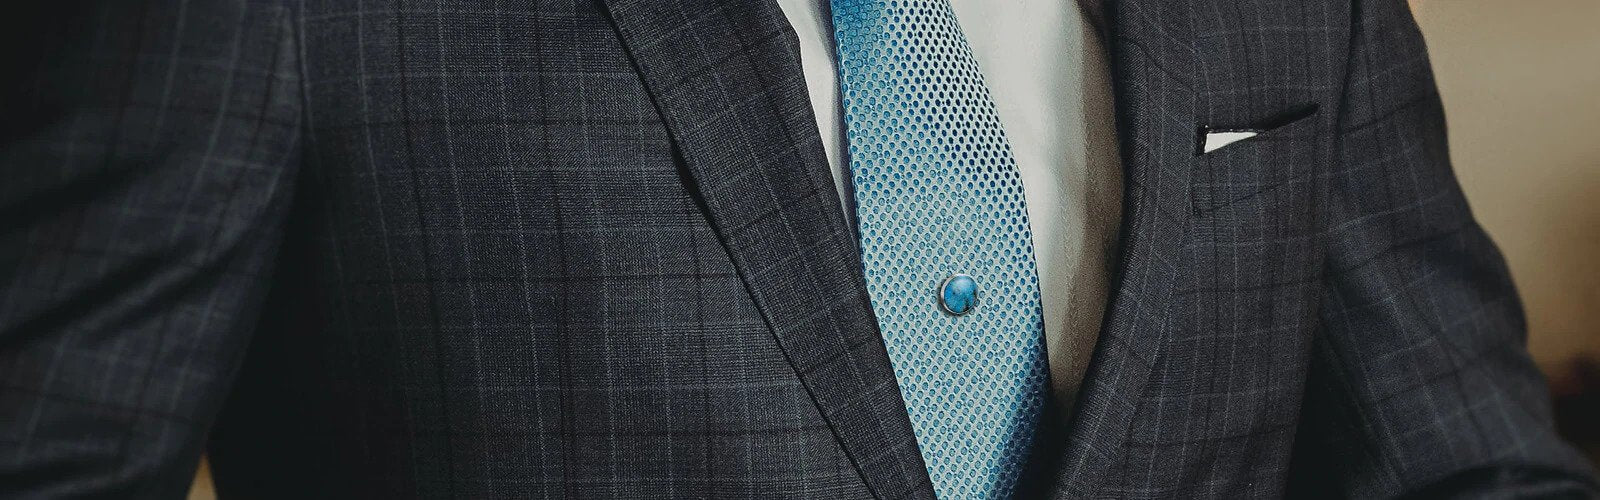 Men's Suit with Blue Tie and Tie Tack